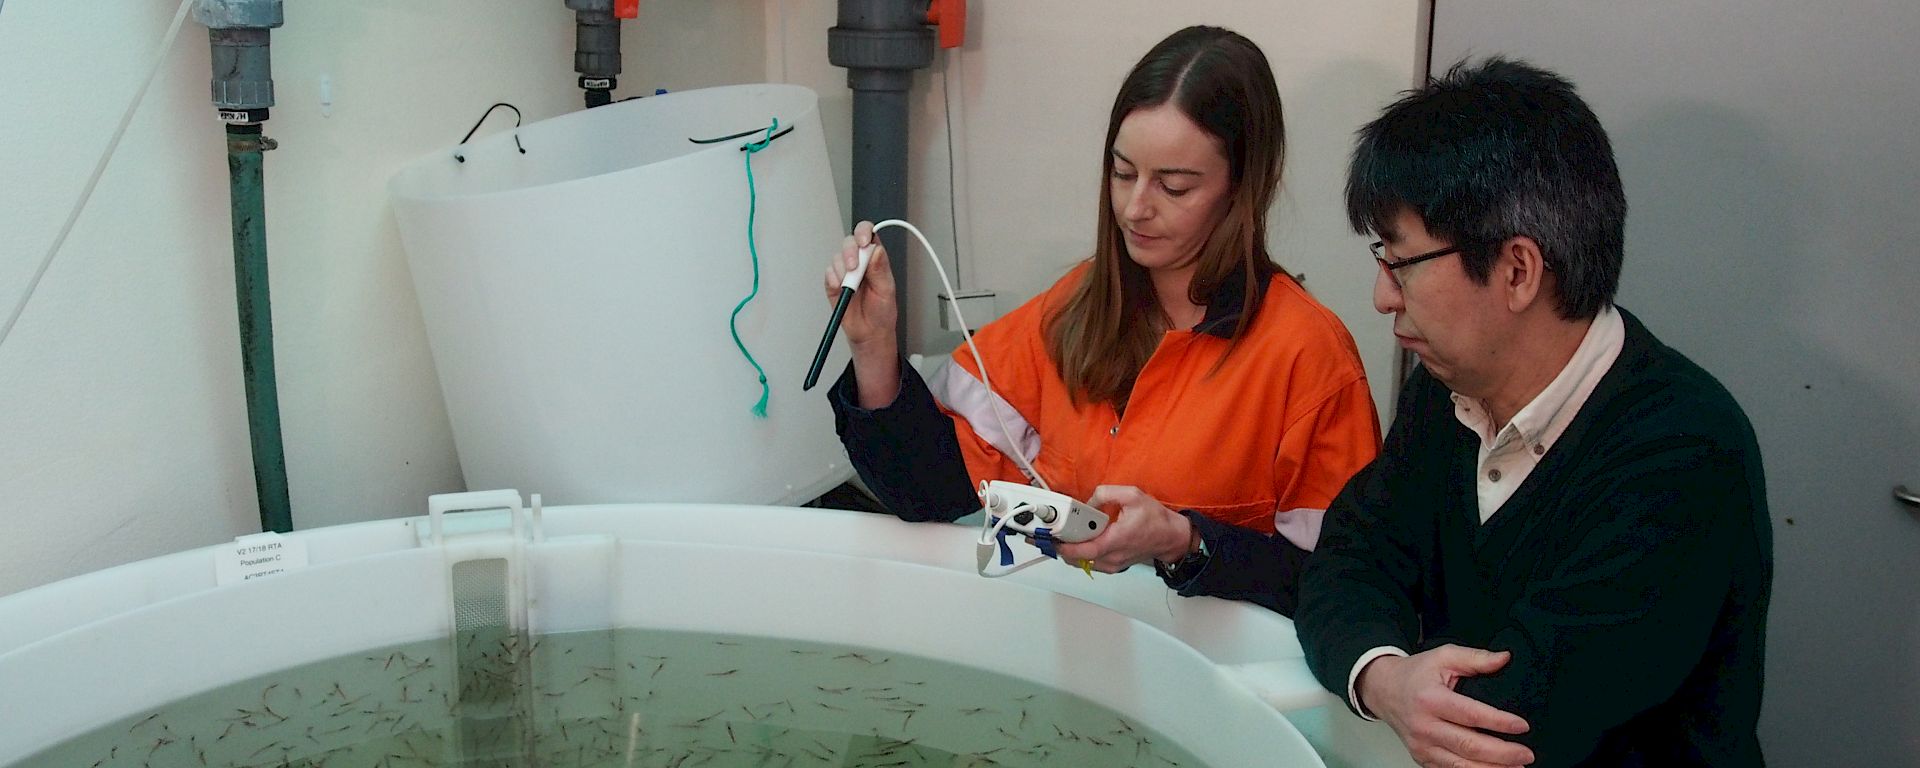 Two researchers in the krill aquarium